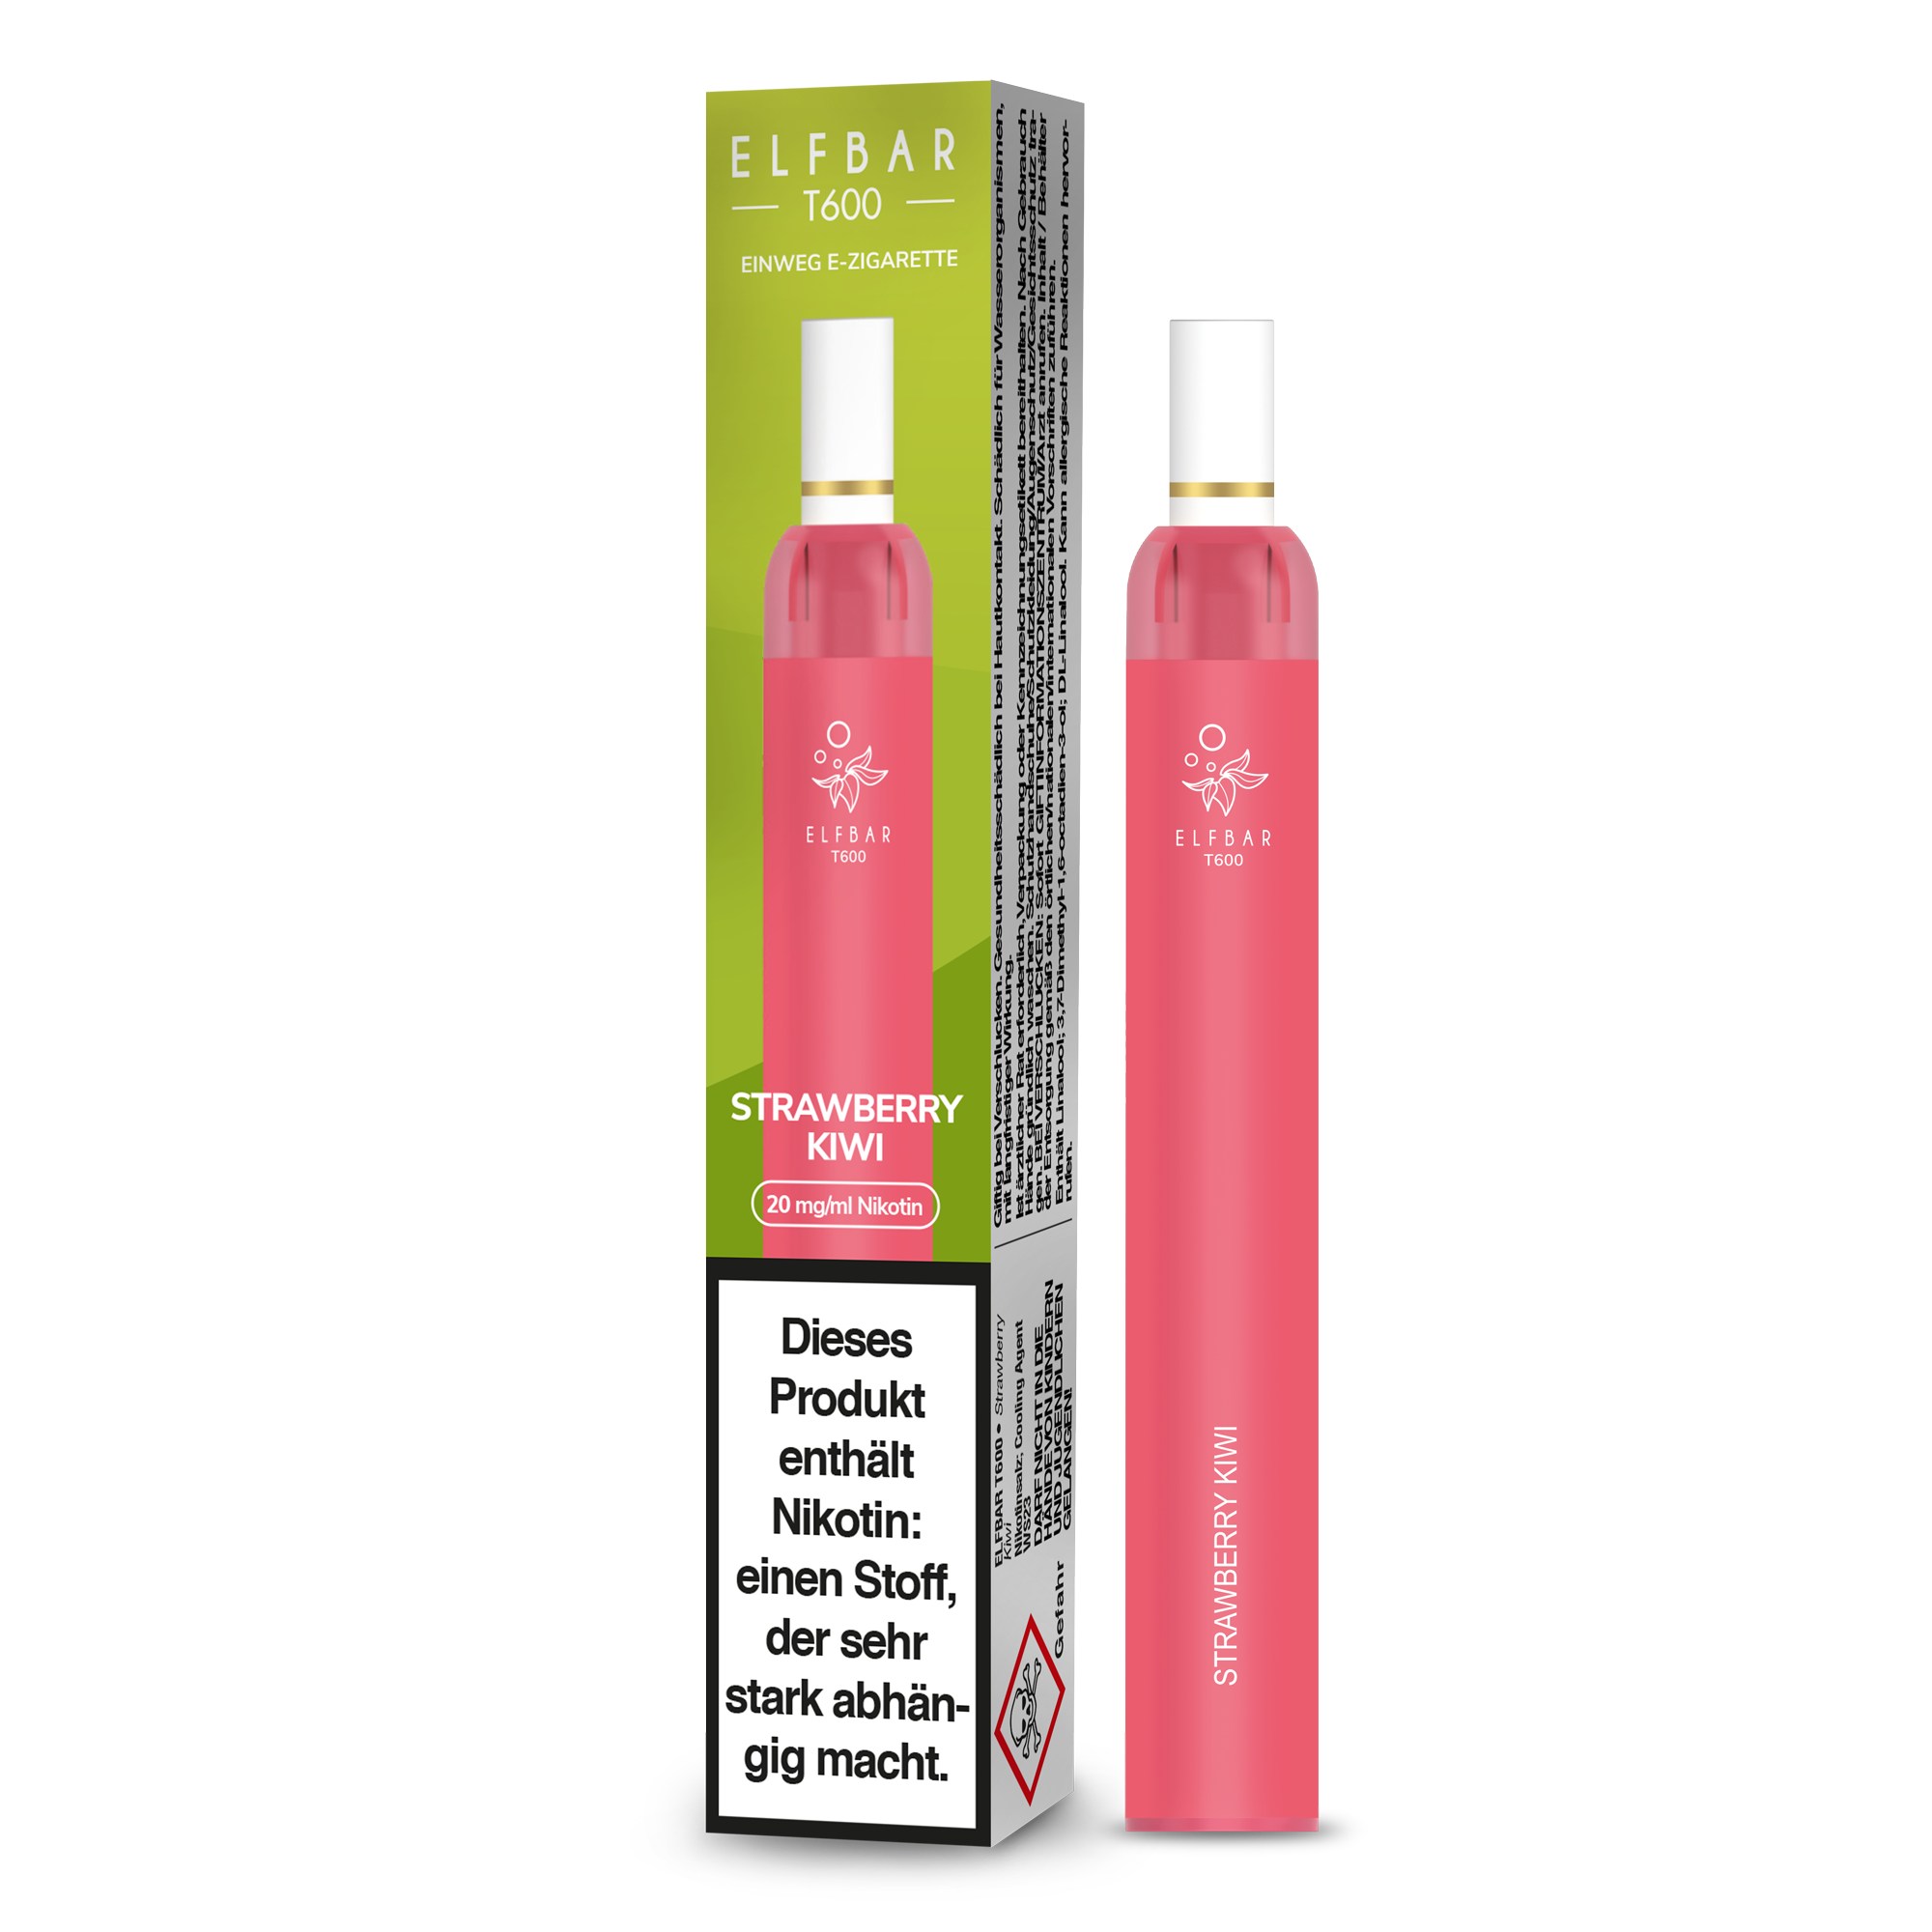 Elf Bar T600 Einweg E-Zigarette - Strawberry Kiwi 20 mg/ml